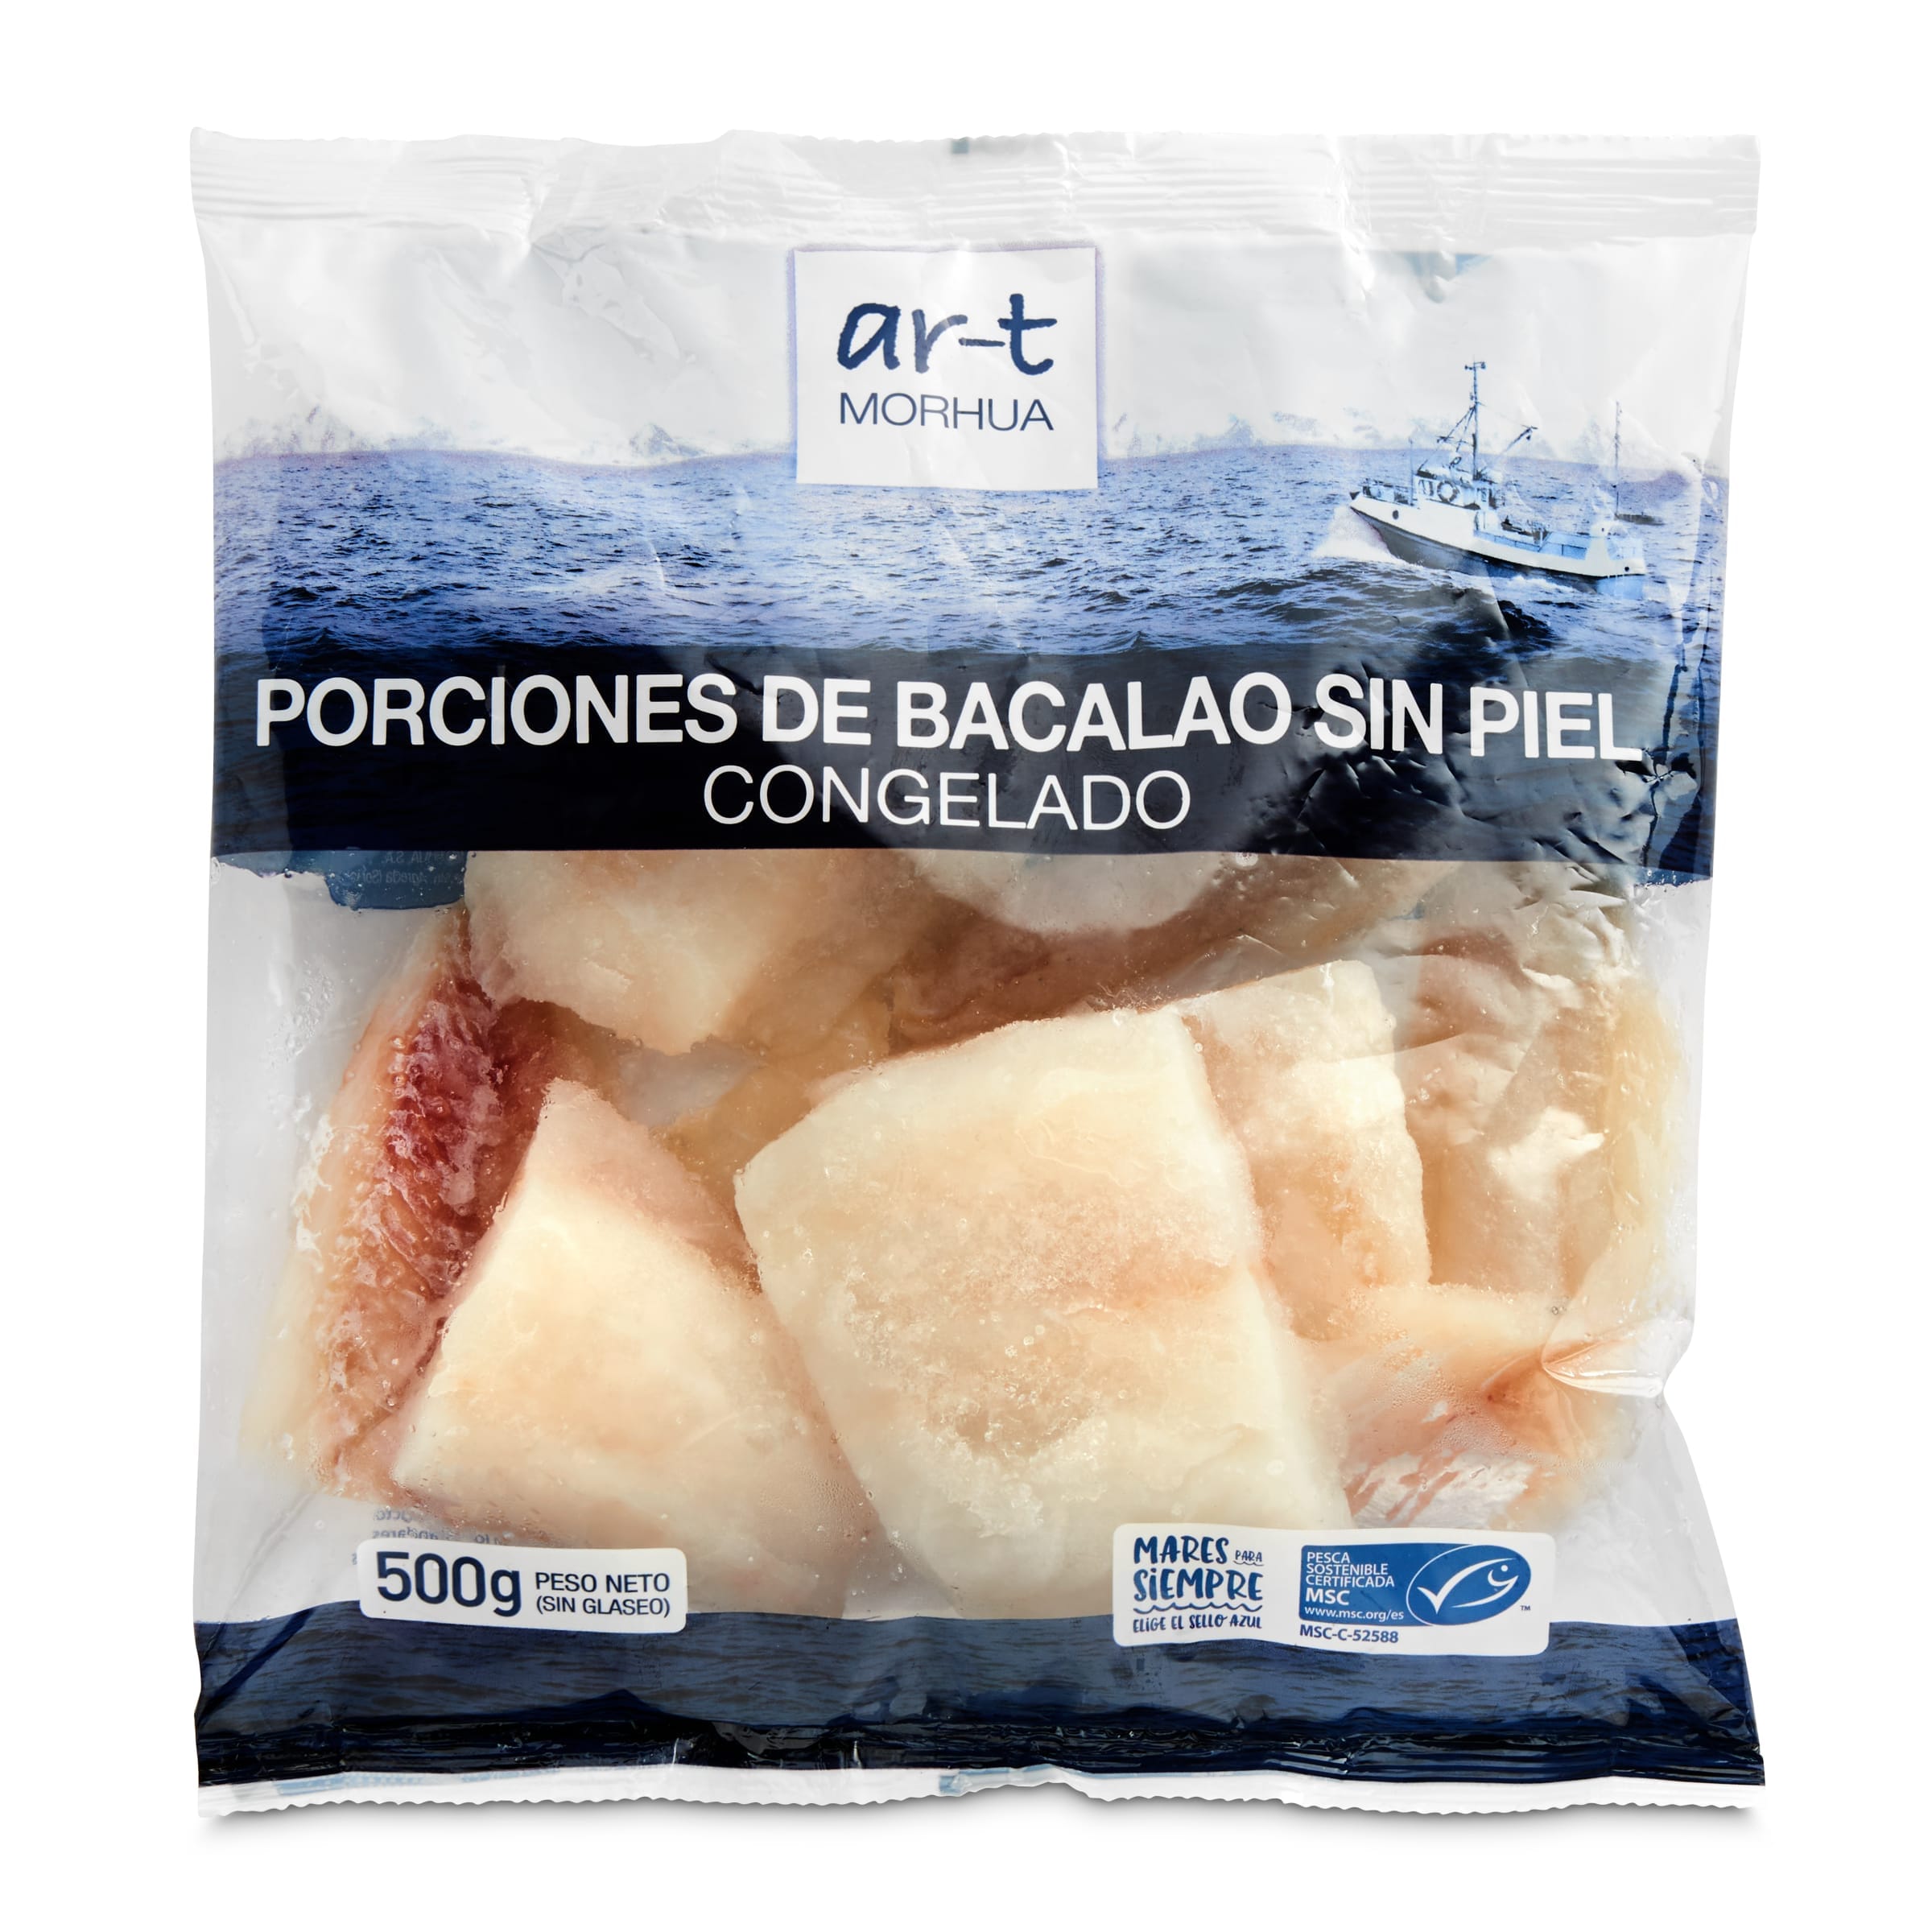 Porciones de bacalao sin piel MSC Ar-t morhua bolsa 500 g - Supermercados  DIA